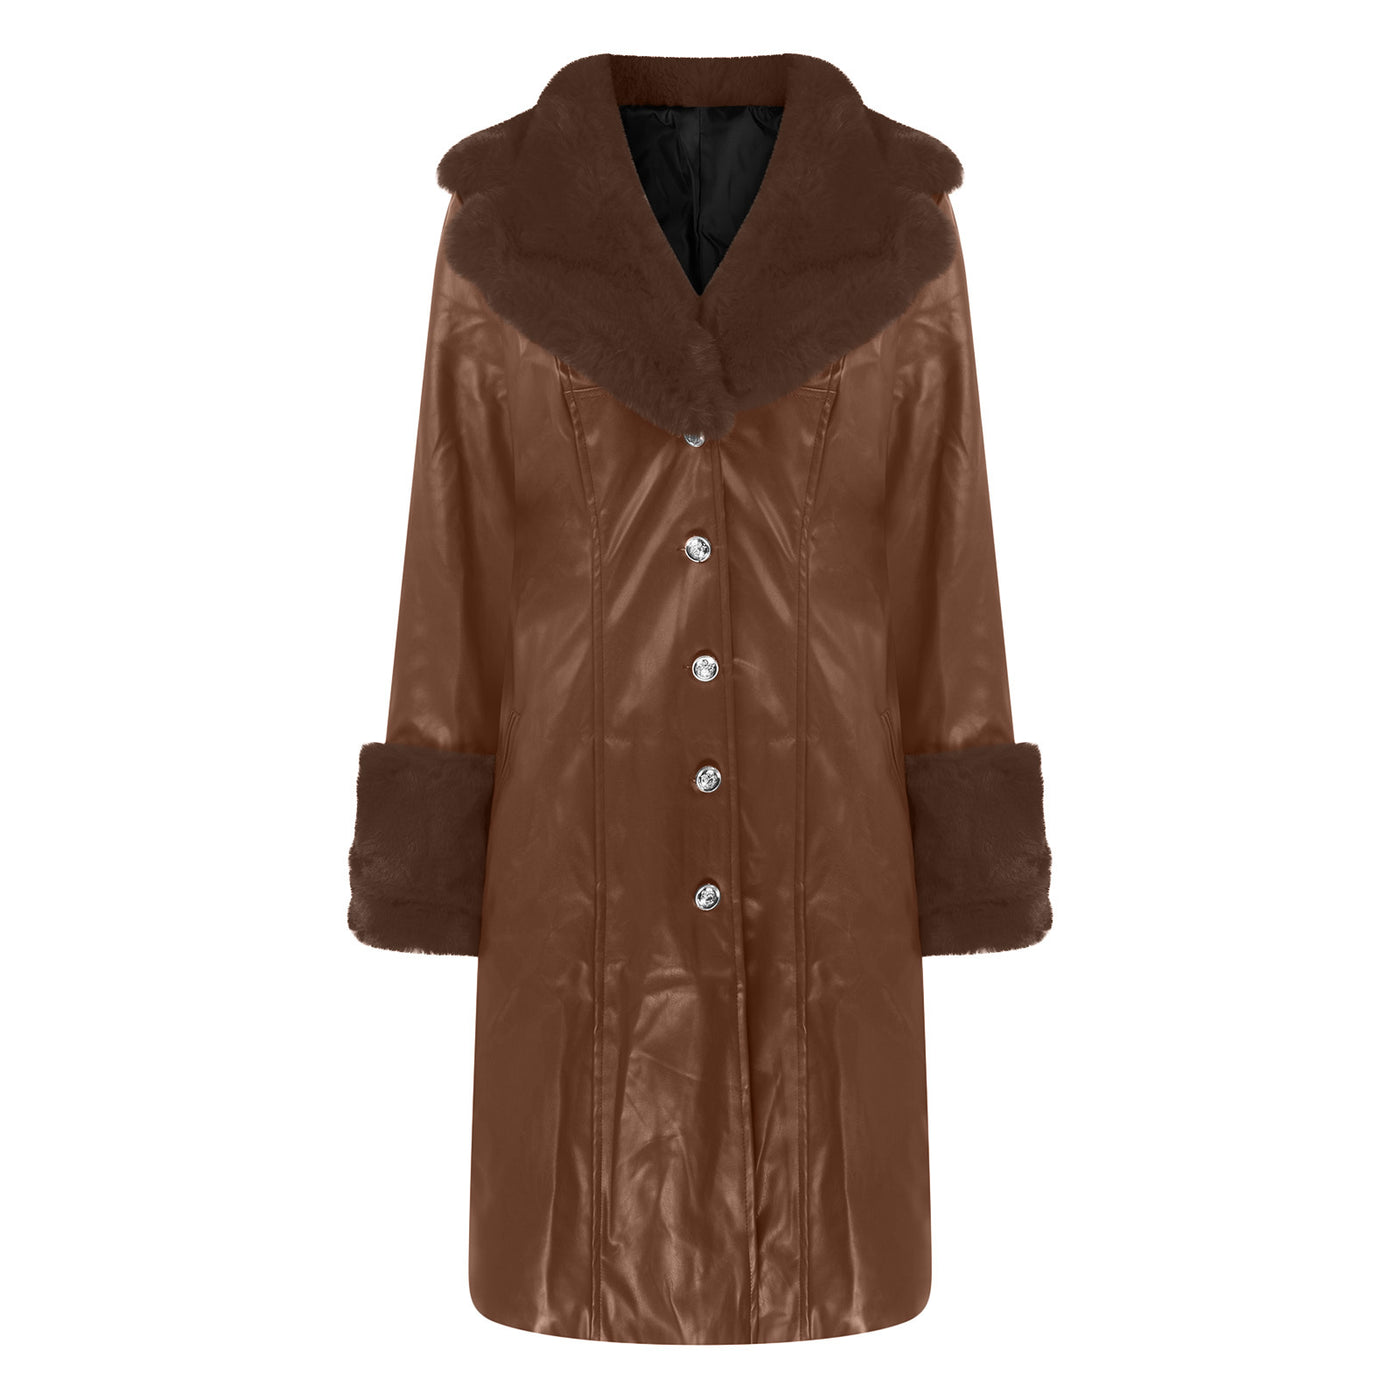 Long Faux Leather & Faux Fur Collar-n-Cuff Coat